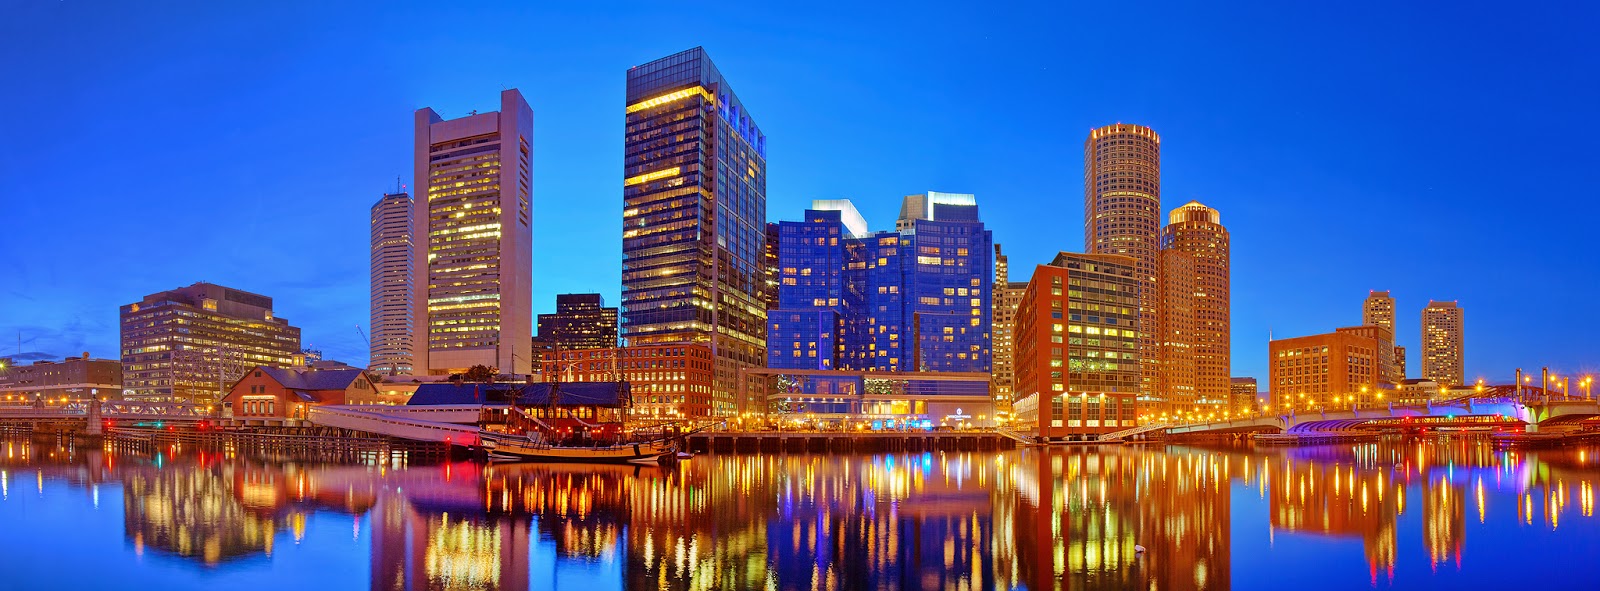 Boston (usa) tourist attractions/ Nine places attract visitors in